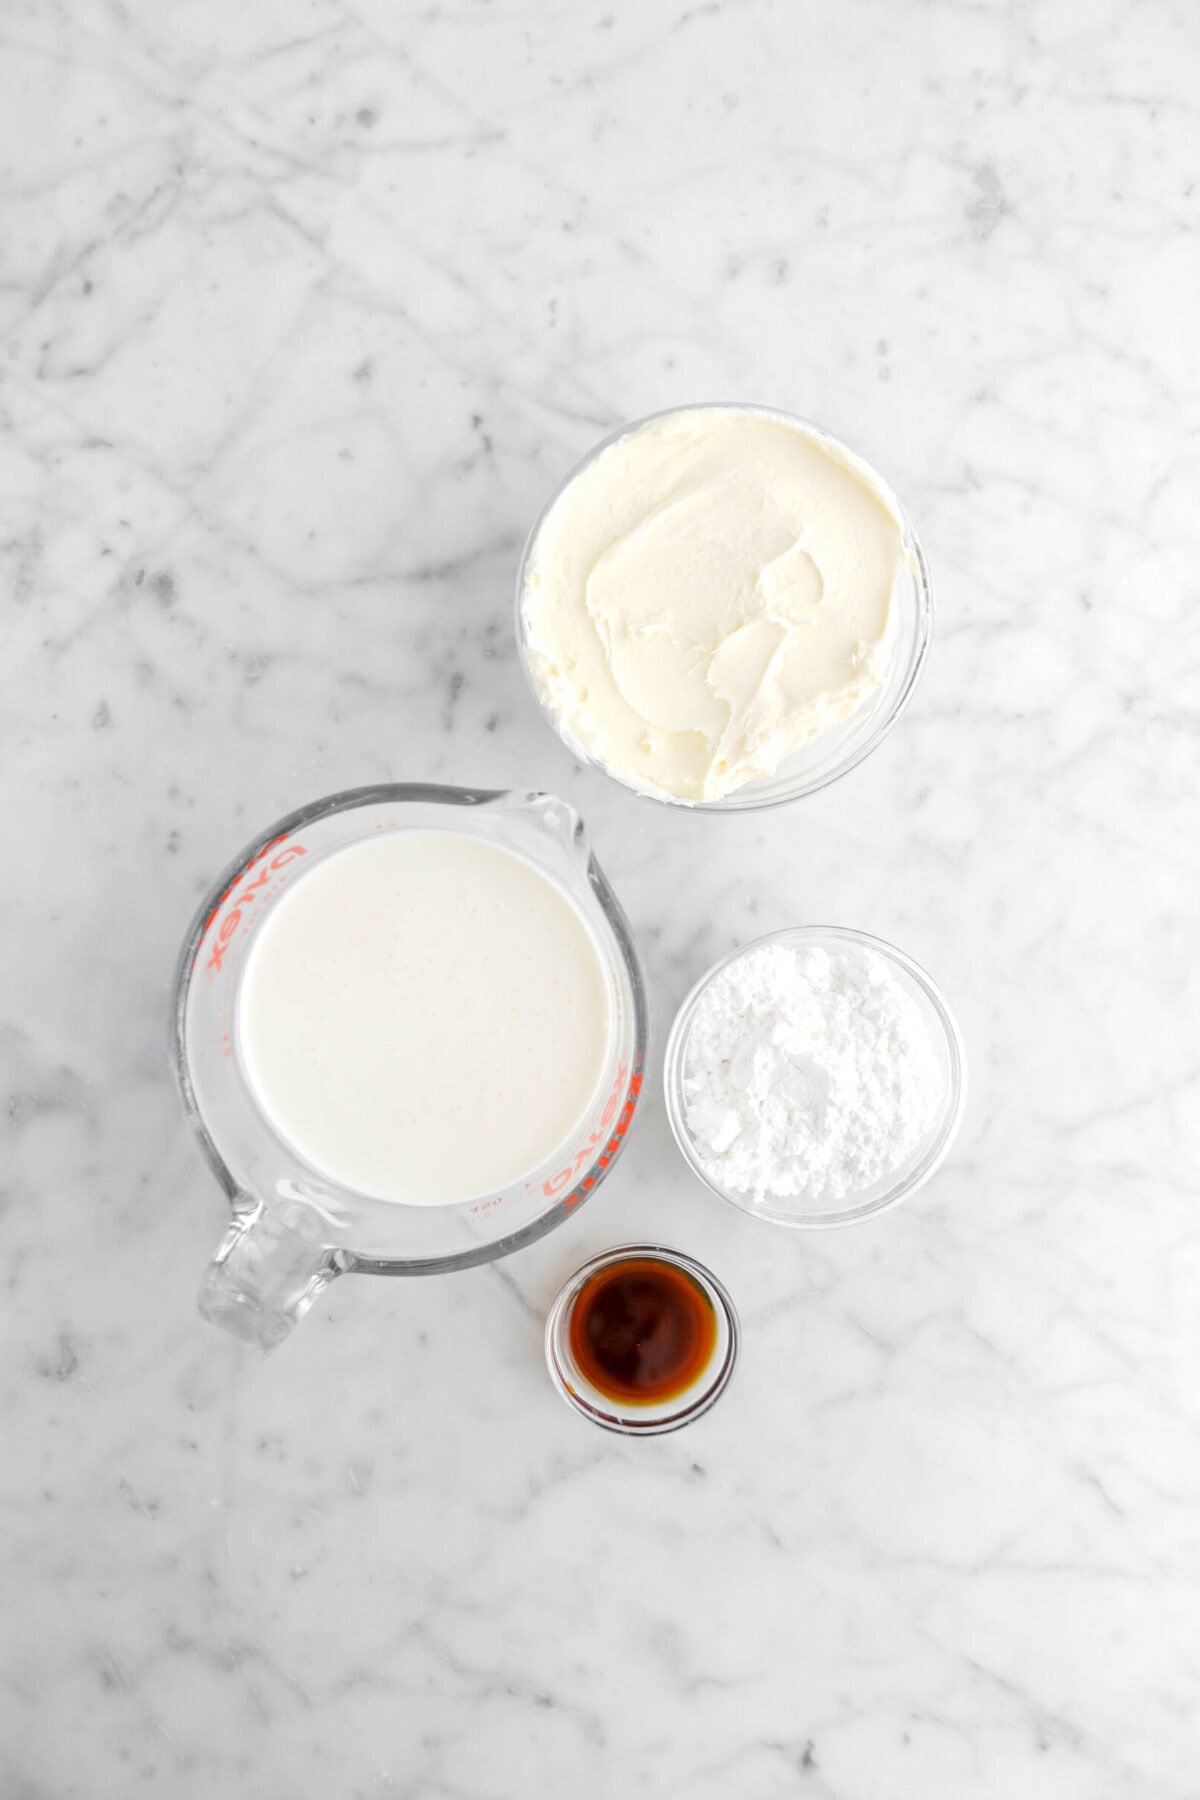 mascarpone, heavy cream, powdered sugar, and vanilla on marble surface